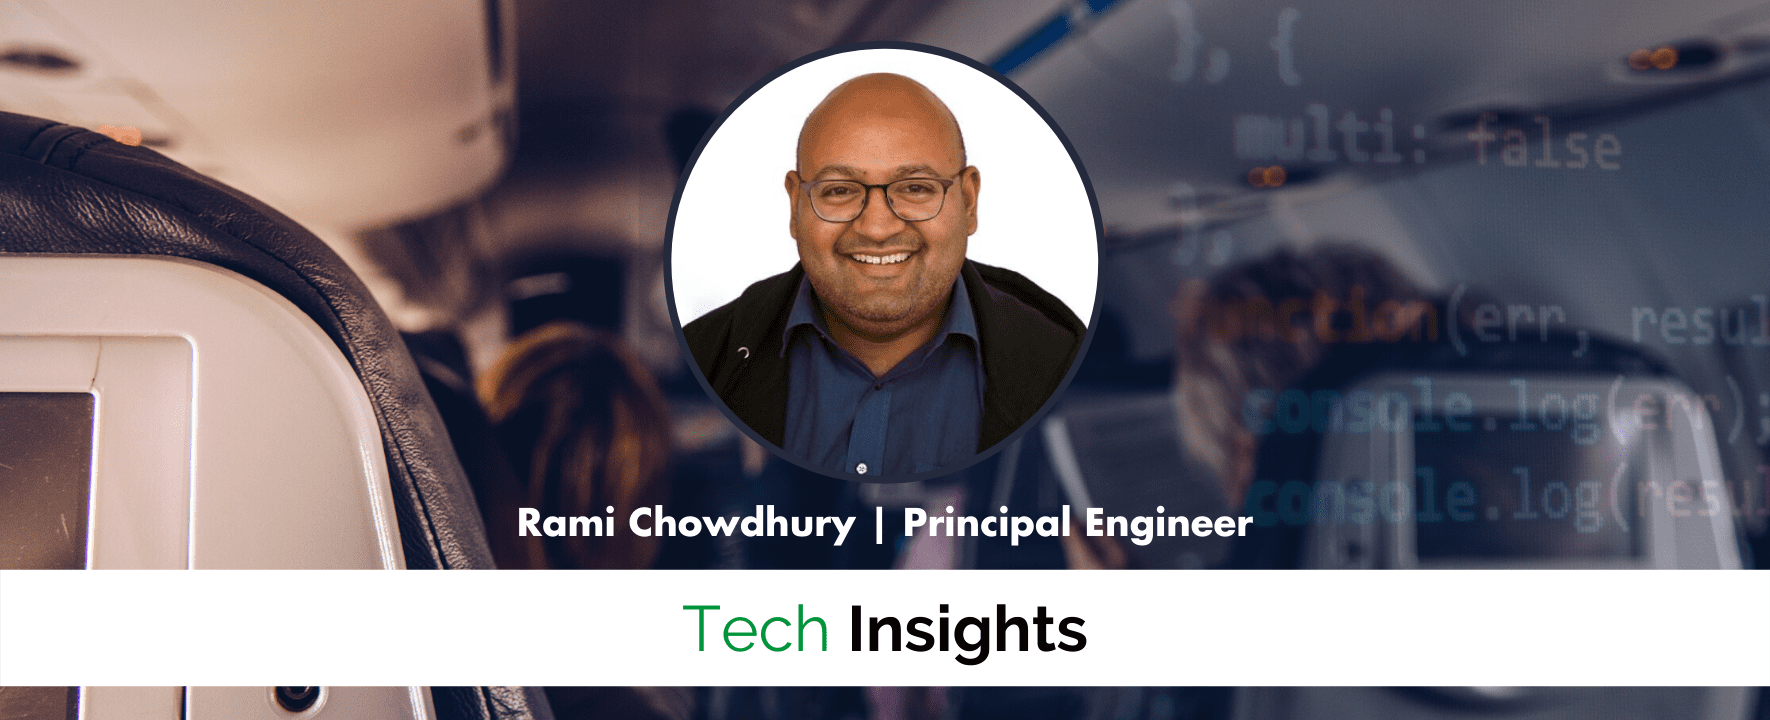 Rami Chowdhury hatchpad interview